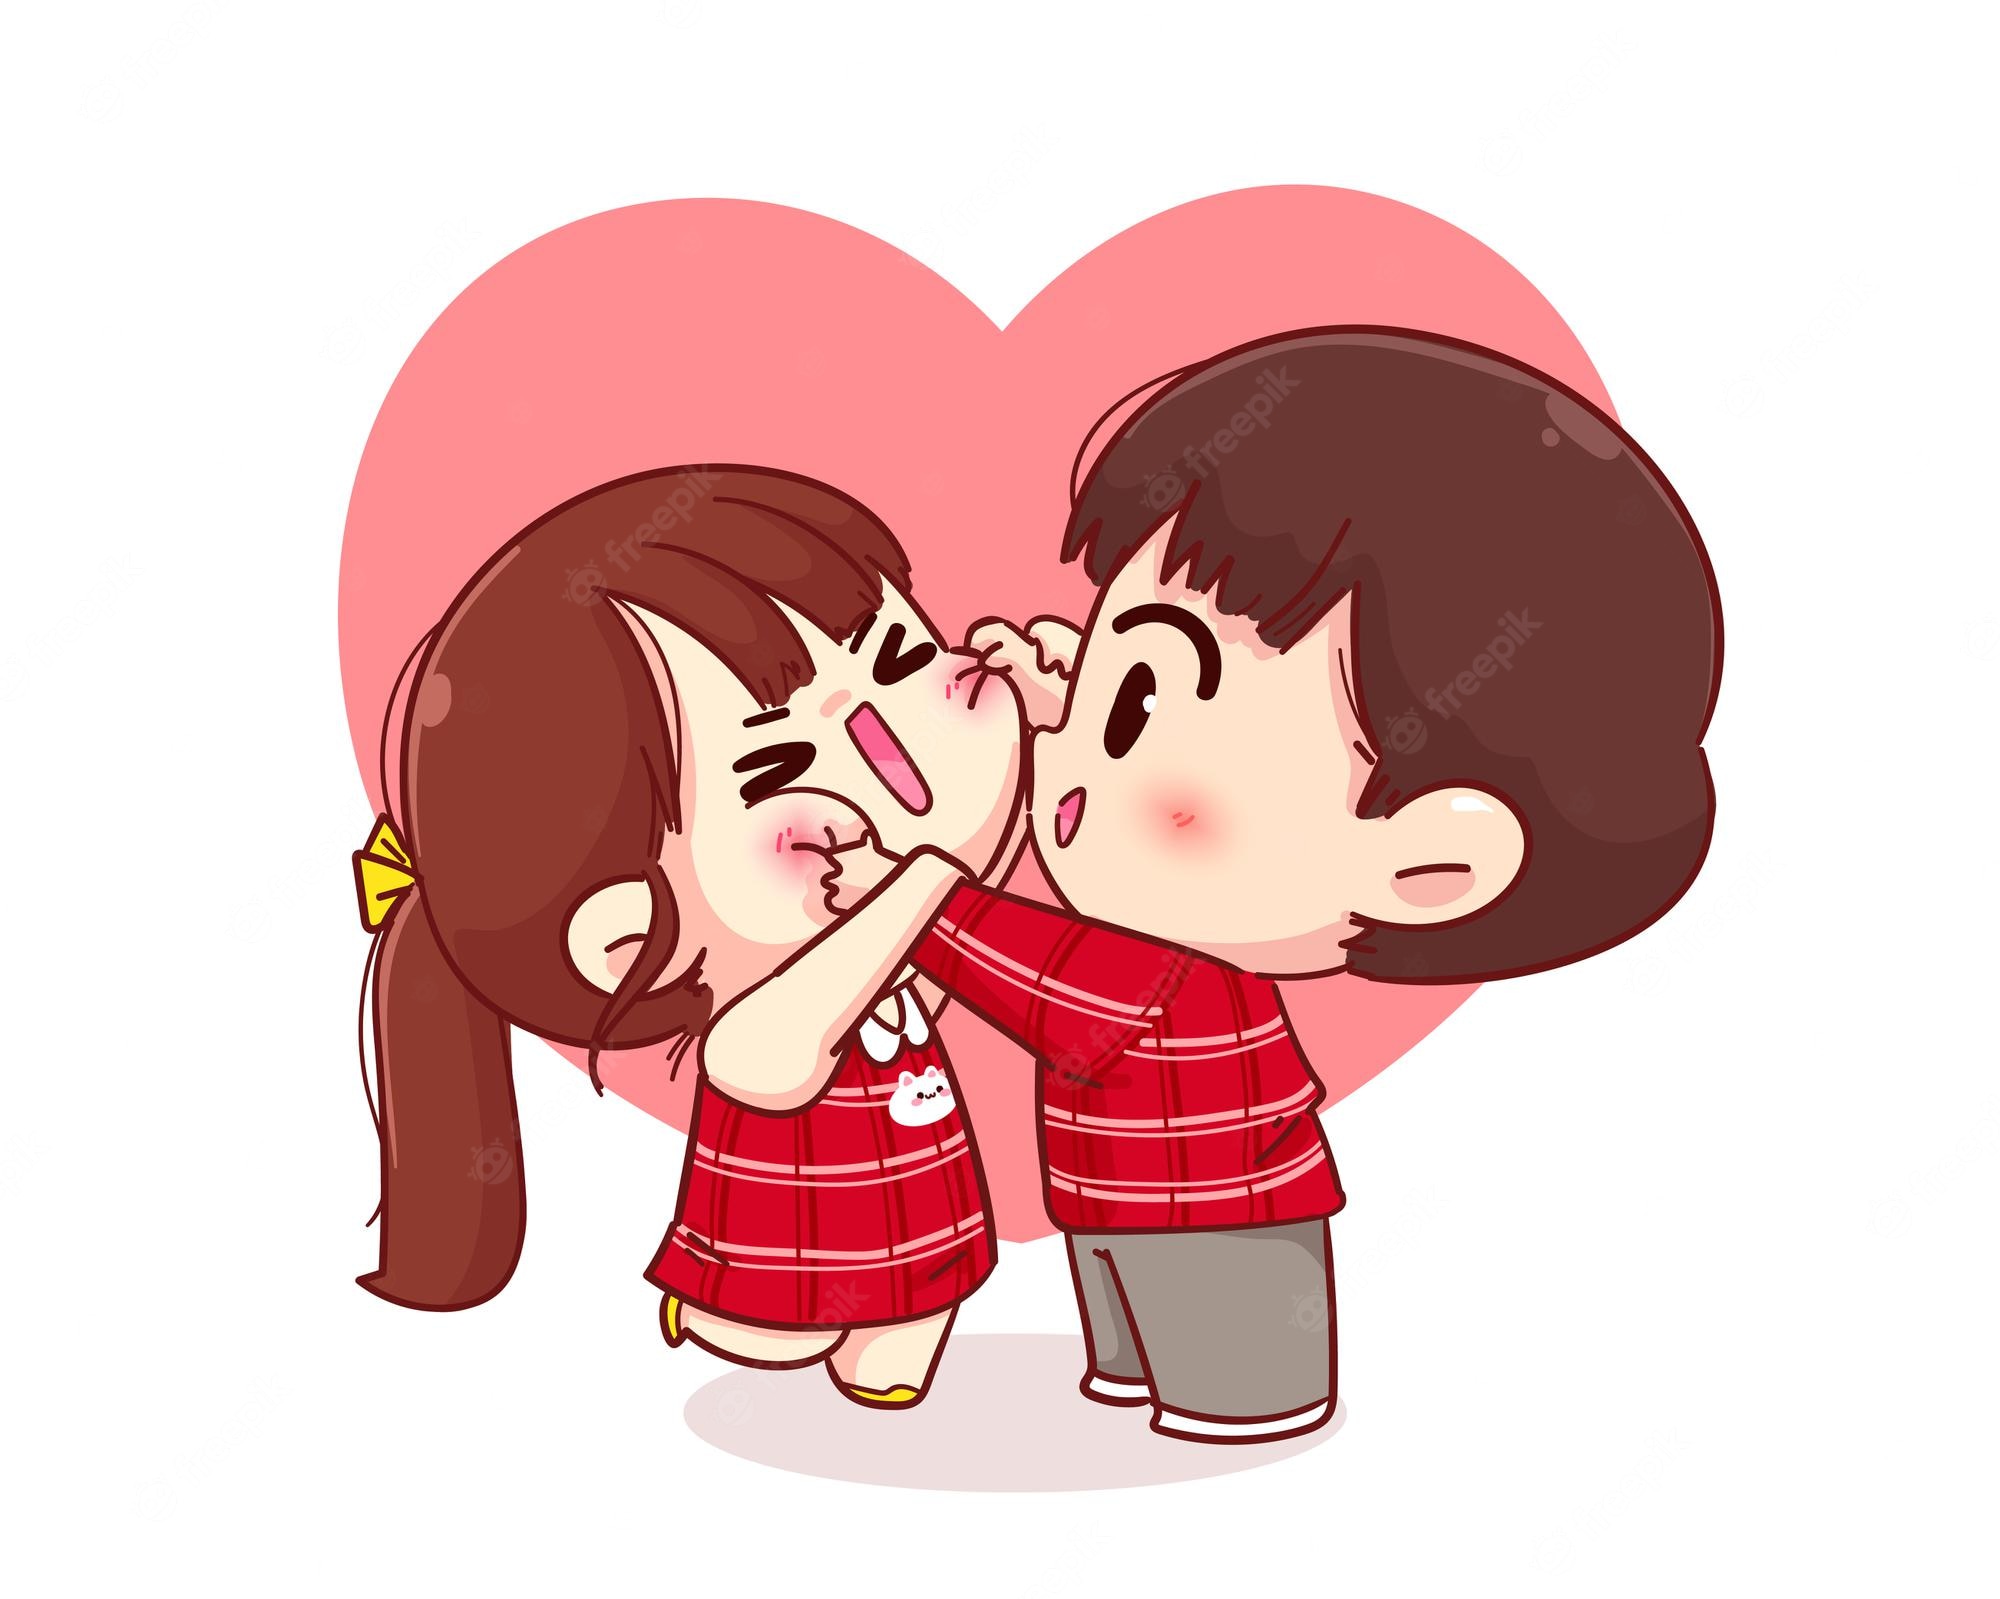 Free Vector | Cute boy cheek pinching his girlfriend, happy valentine, cartoon character illustration